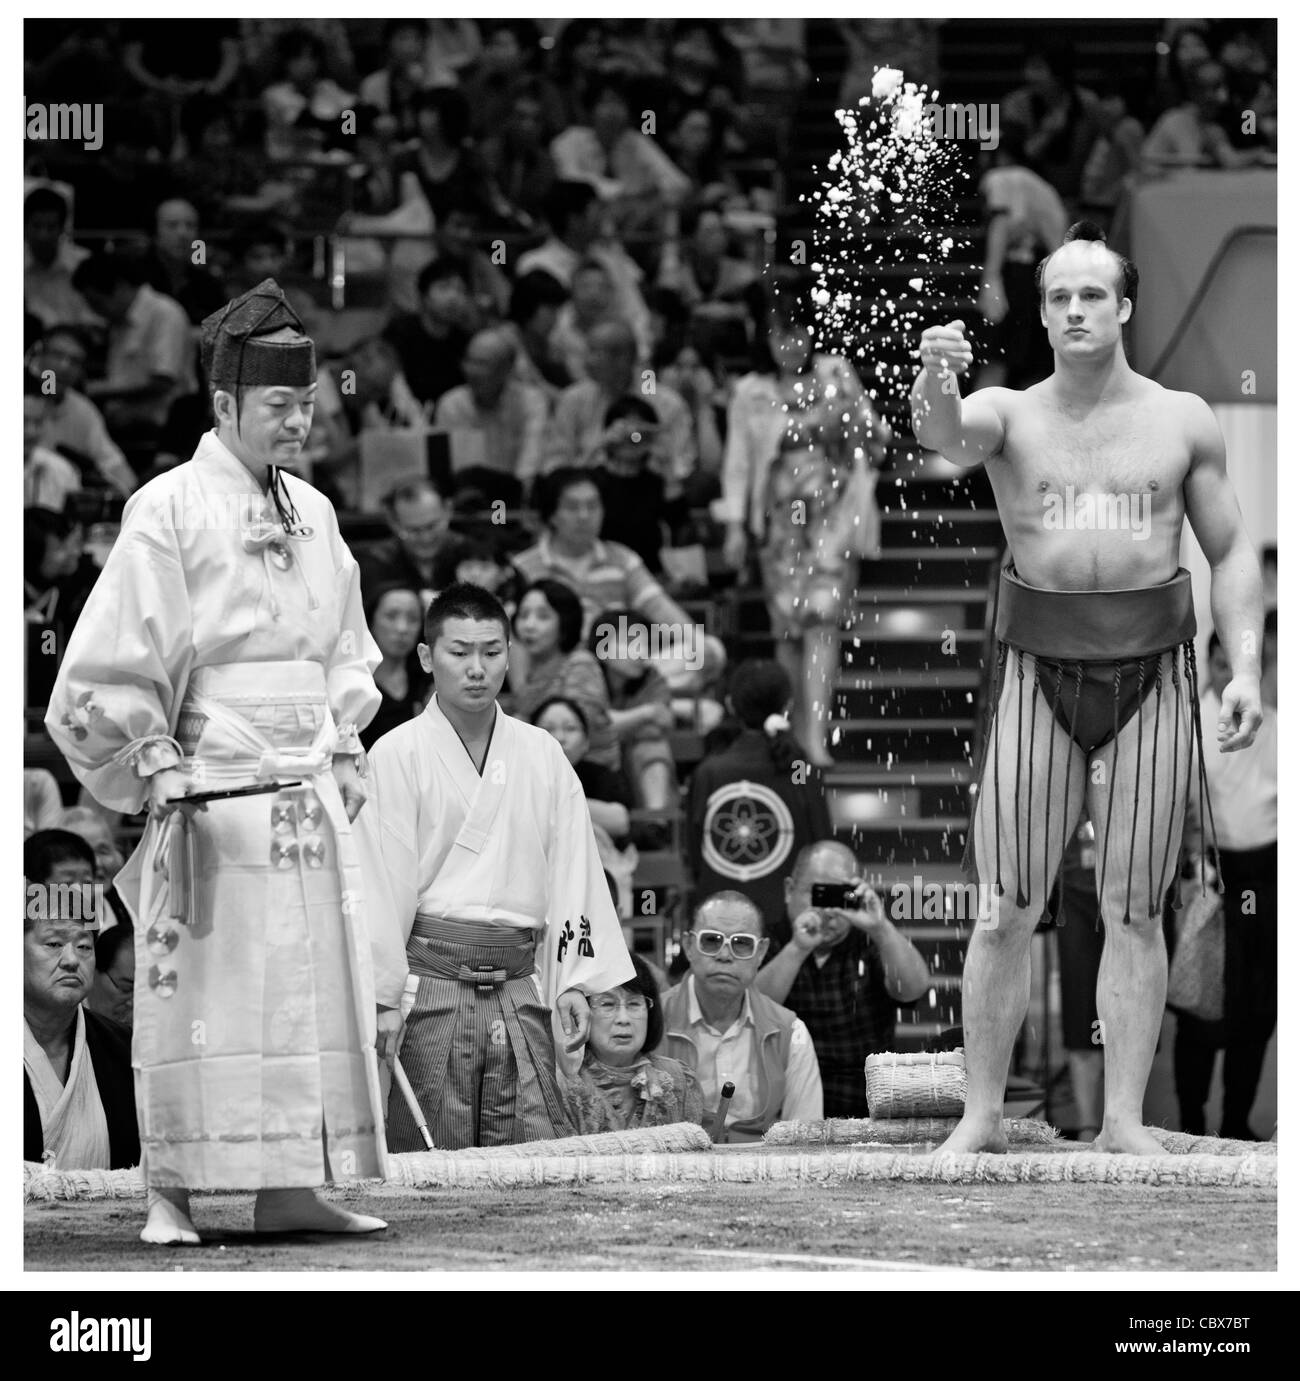 Czech Sumo wrestler Takanoyama throwing salt to purify the ring (Dohyo) - Ryogoku Kokugikan, Tokyo, Japan Stock Photo